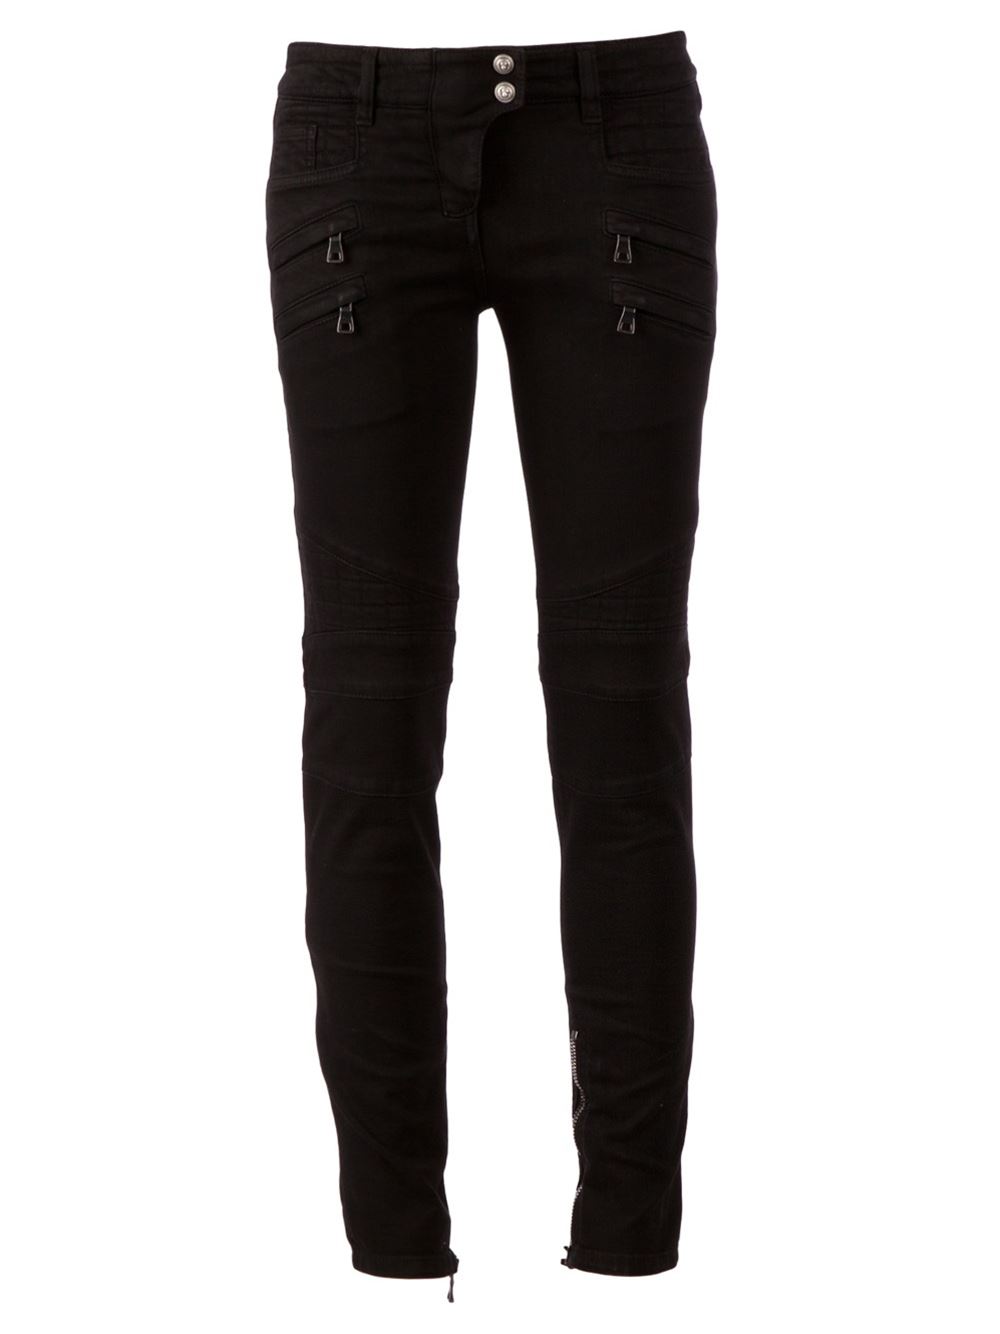 Black cotton blend skinny jeans from Balmain